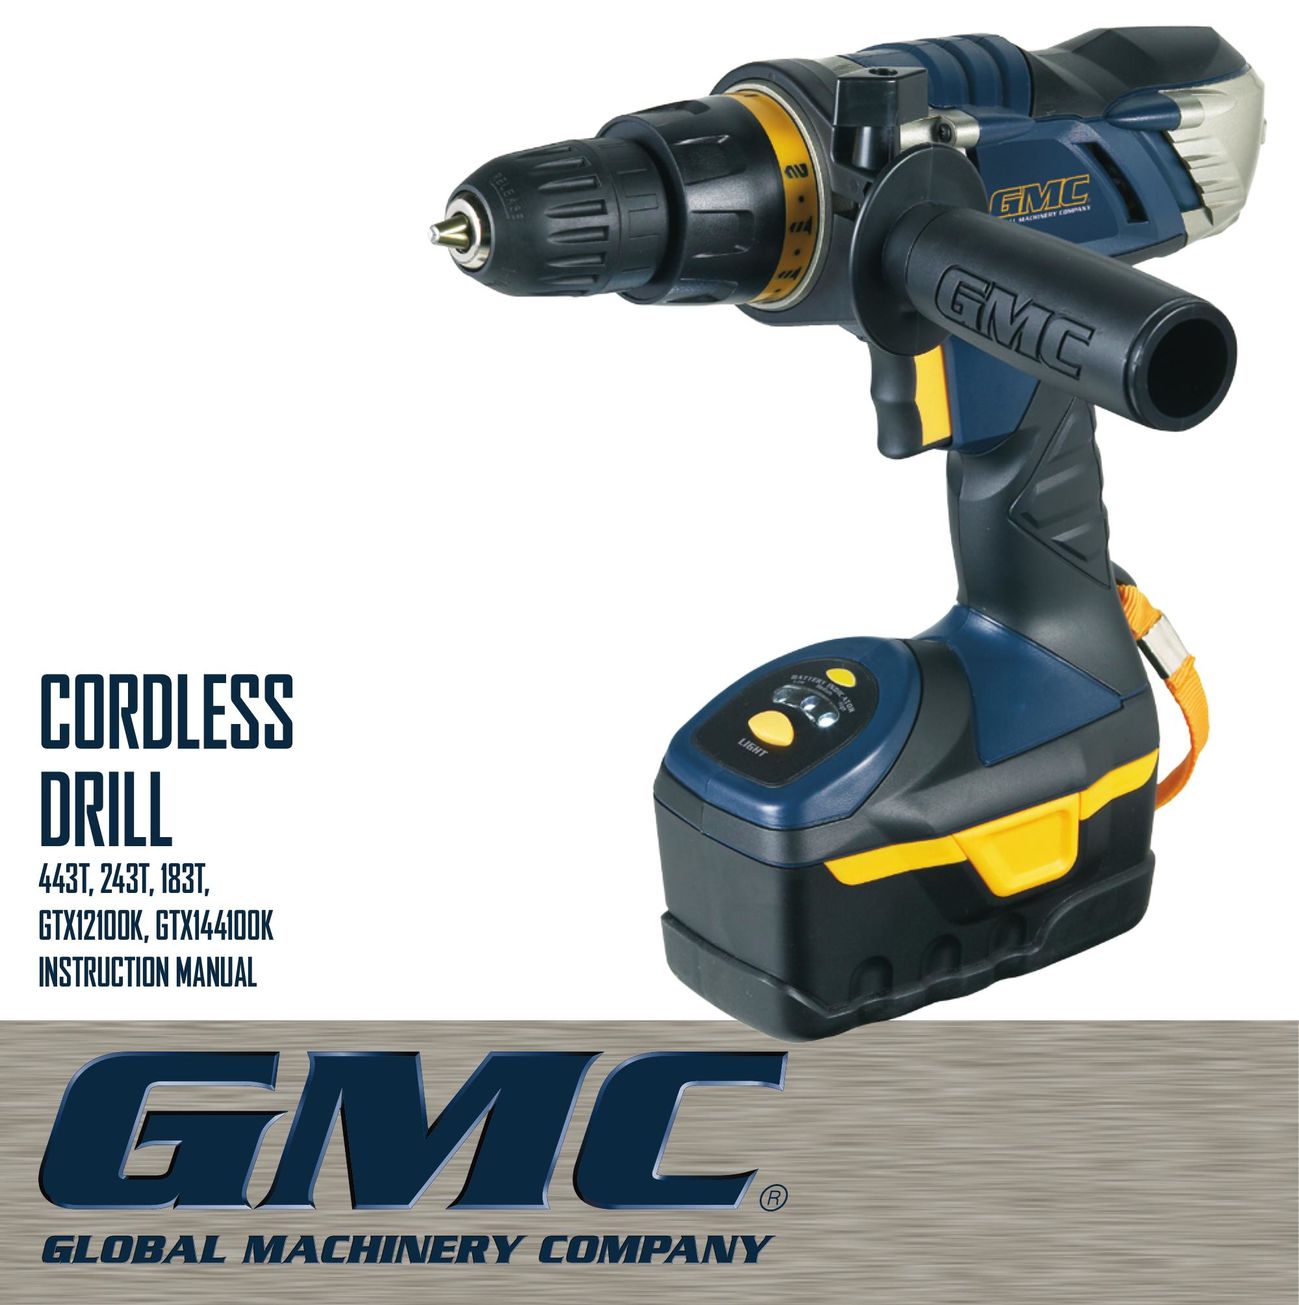 Global Machinery Company 183T Drill User Manual